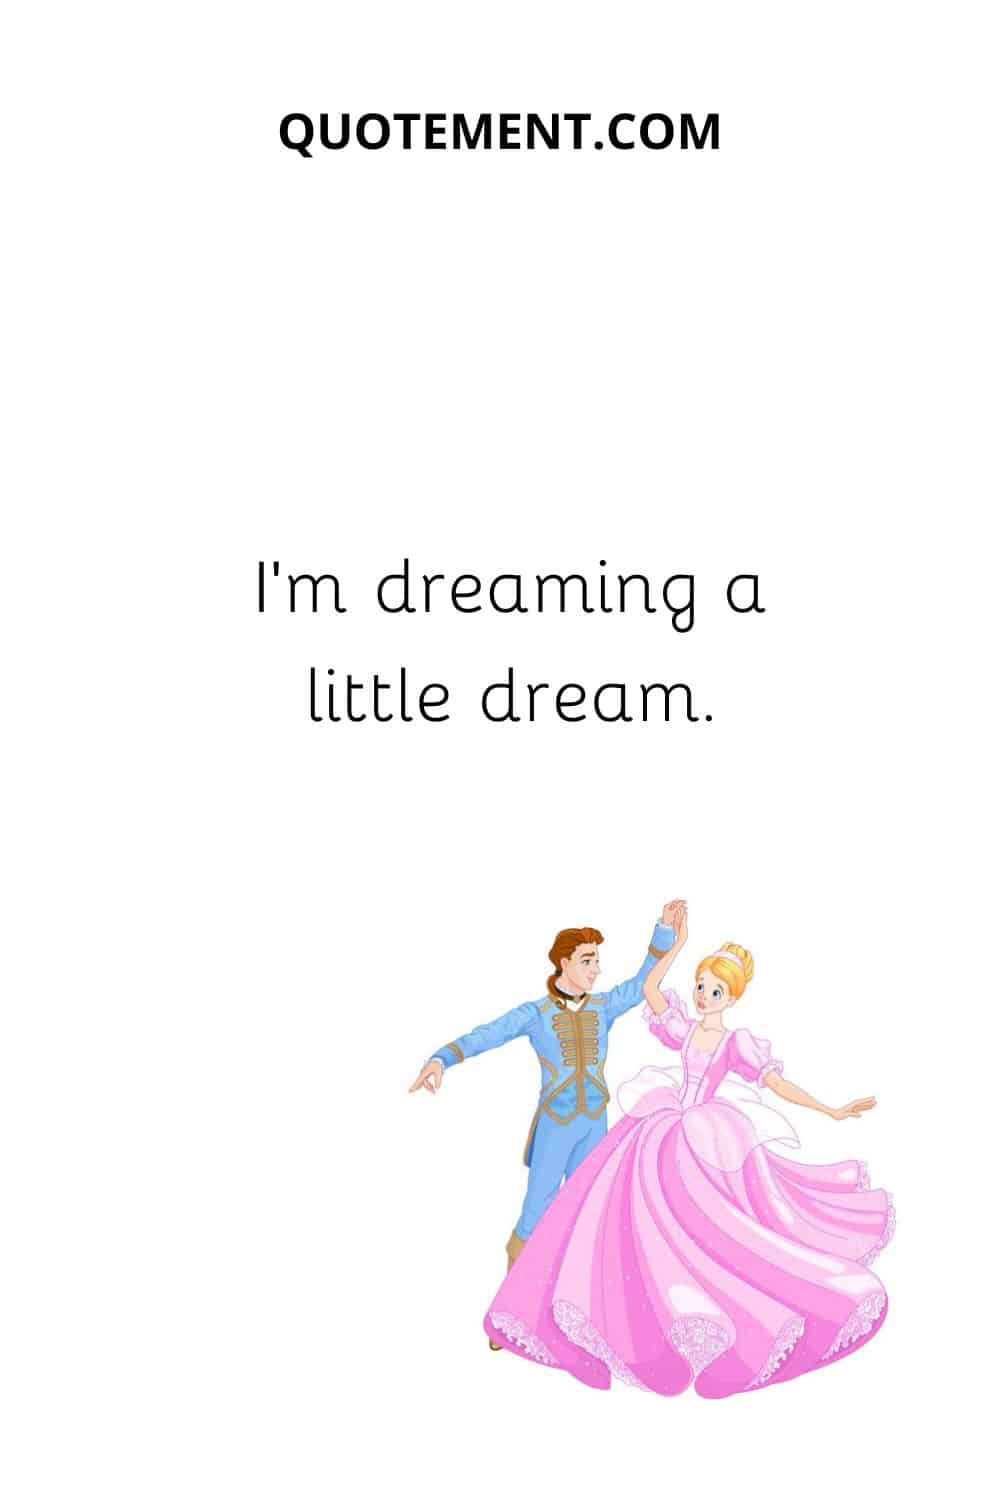 I’m dreaming a little dream.